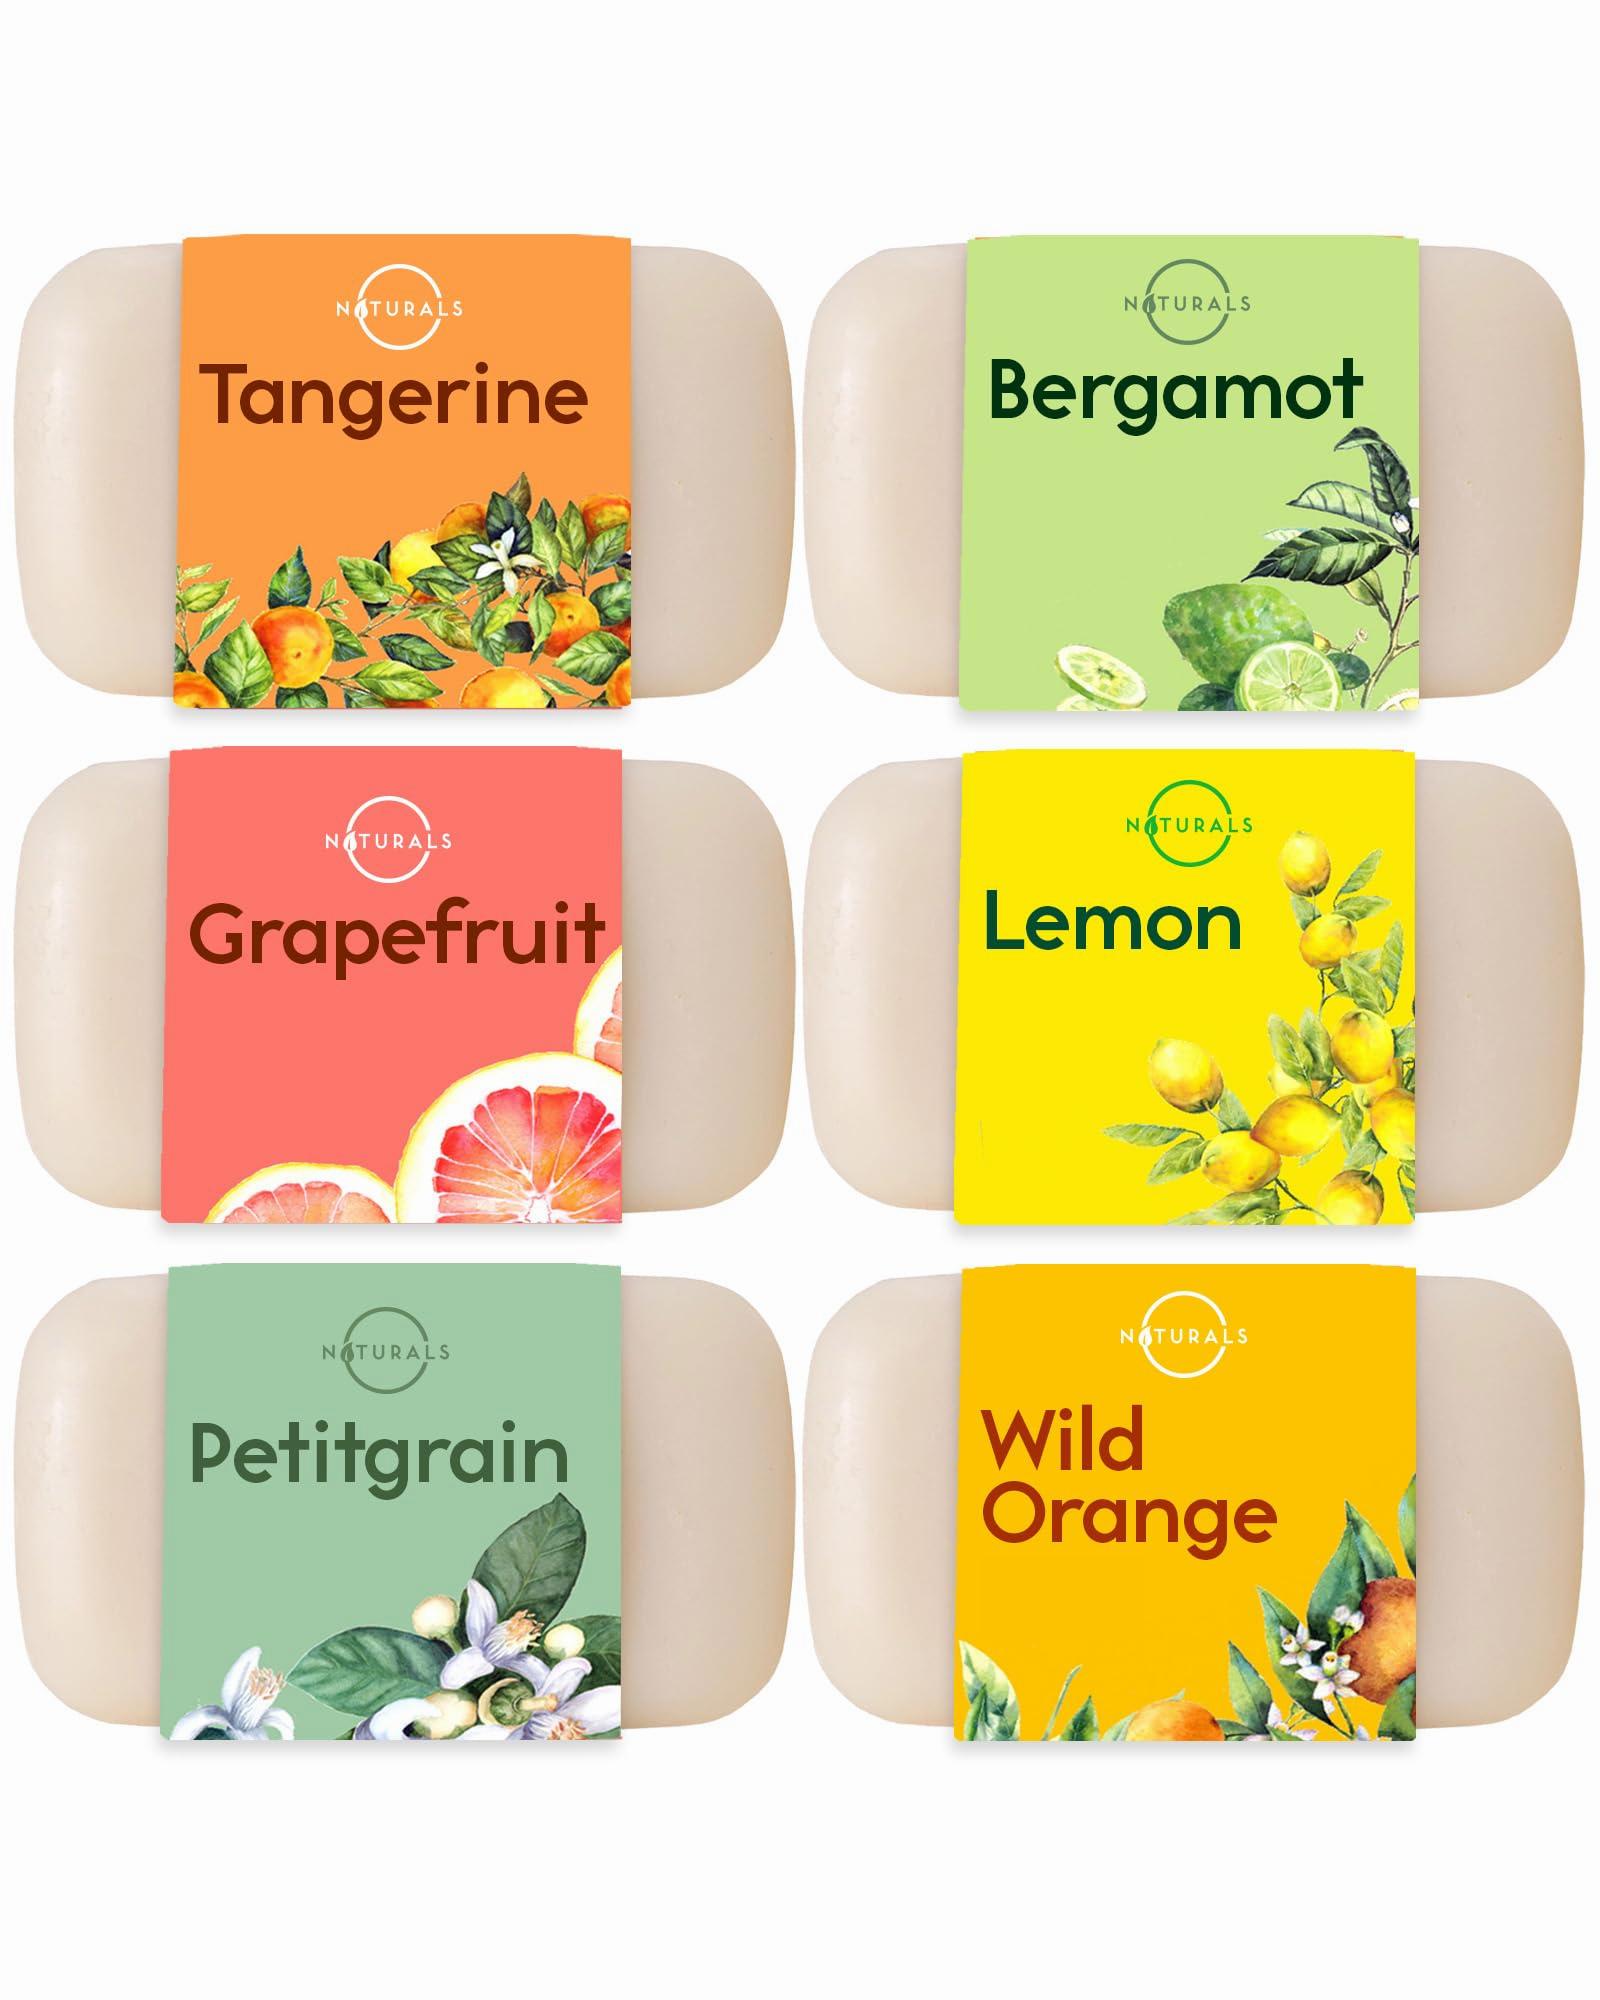 Six unwrapped bars of soap with labels indicating the scents: tangerine, bergamot, grapefruit, lemon, petitgrain, and wild orange.